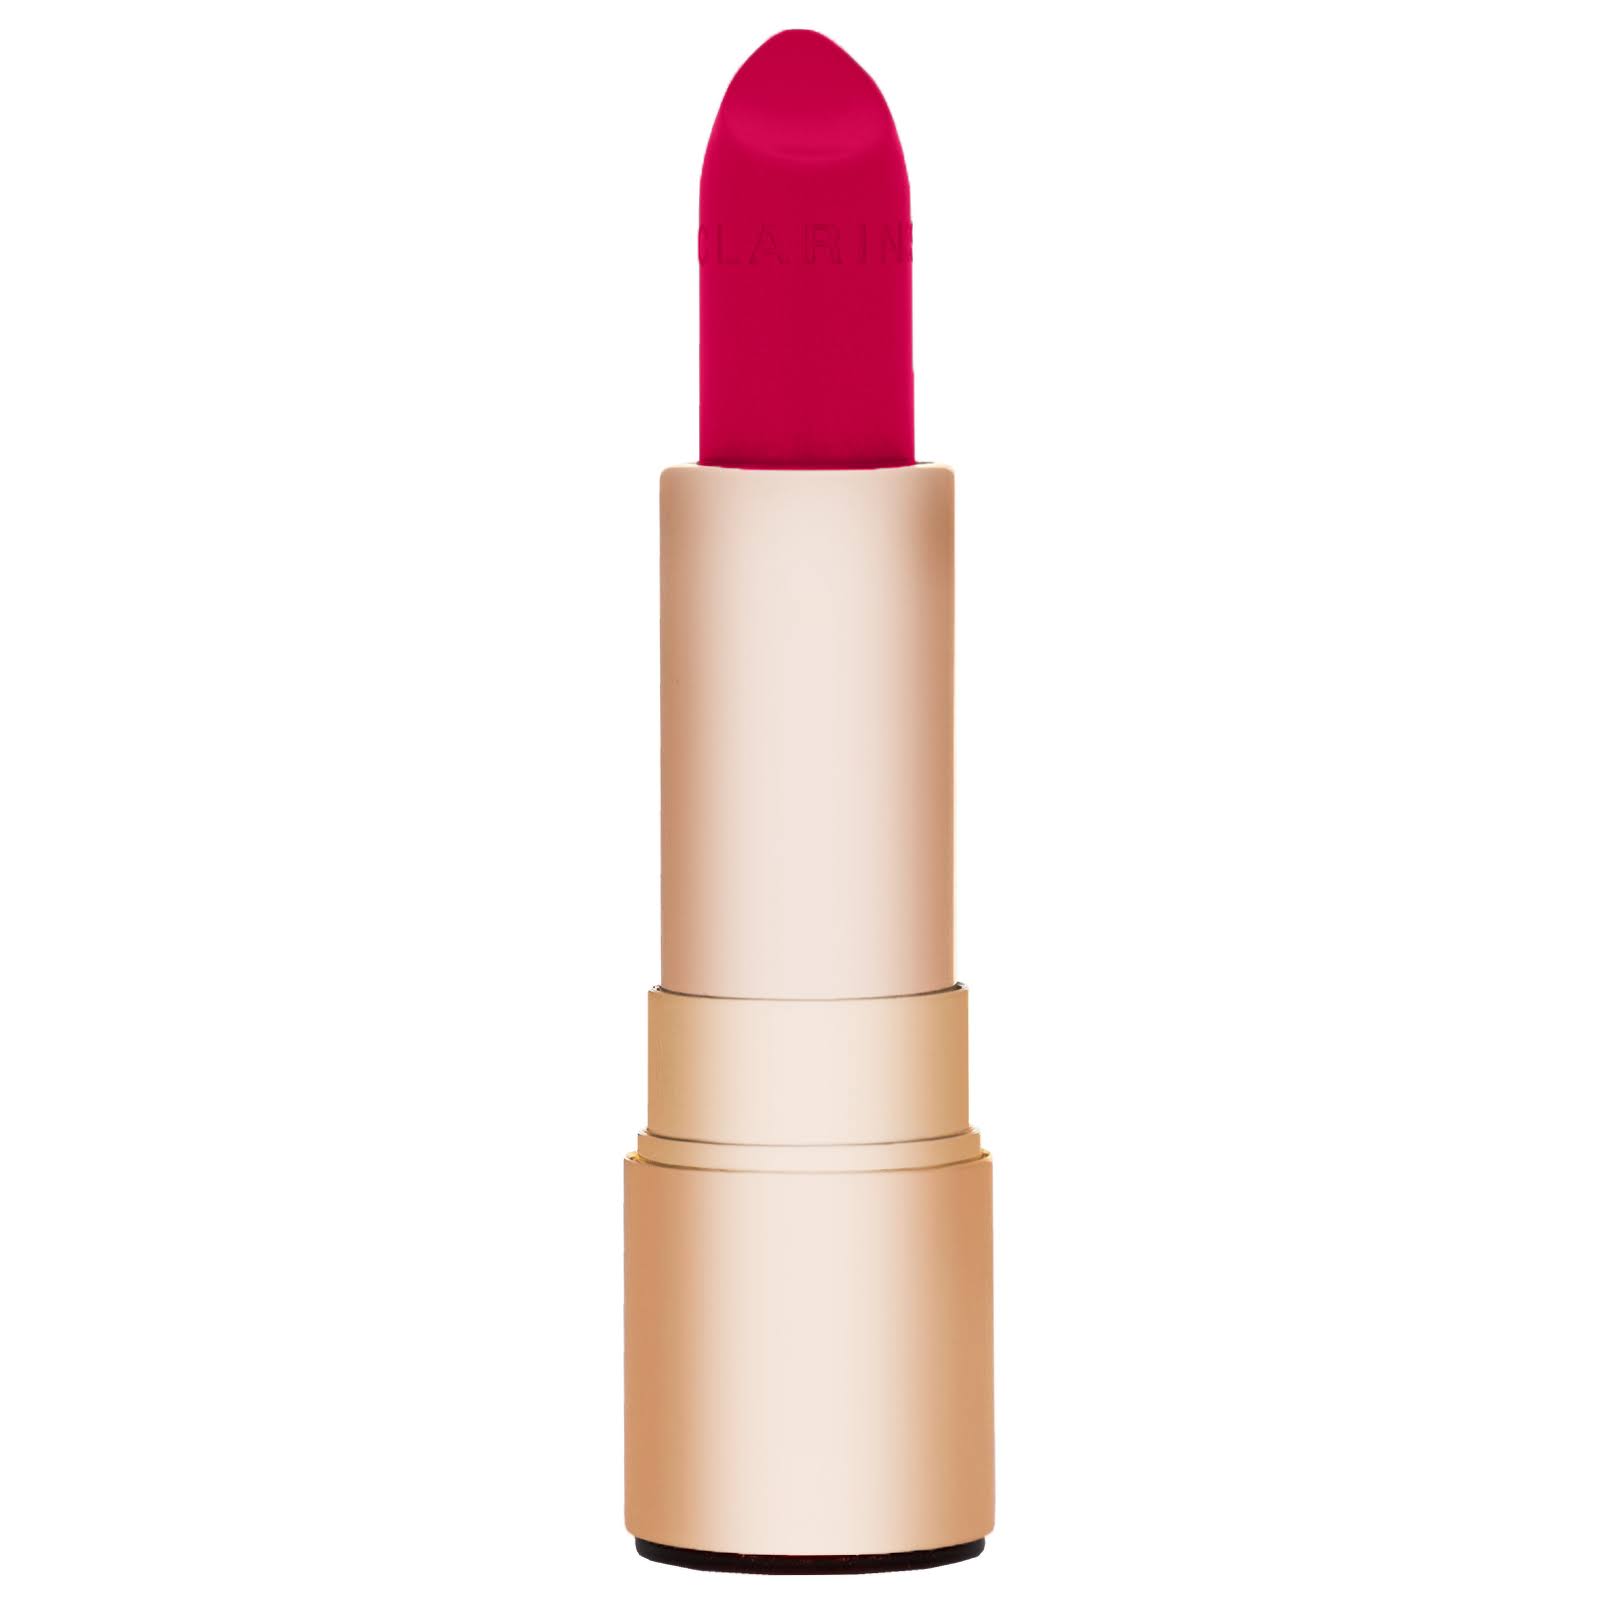 Clarins Joli Rouge Lipstick - Hot Pink, 3.5g